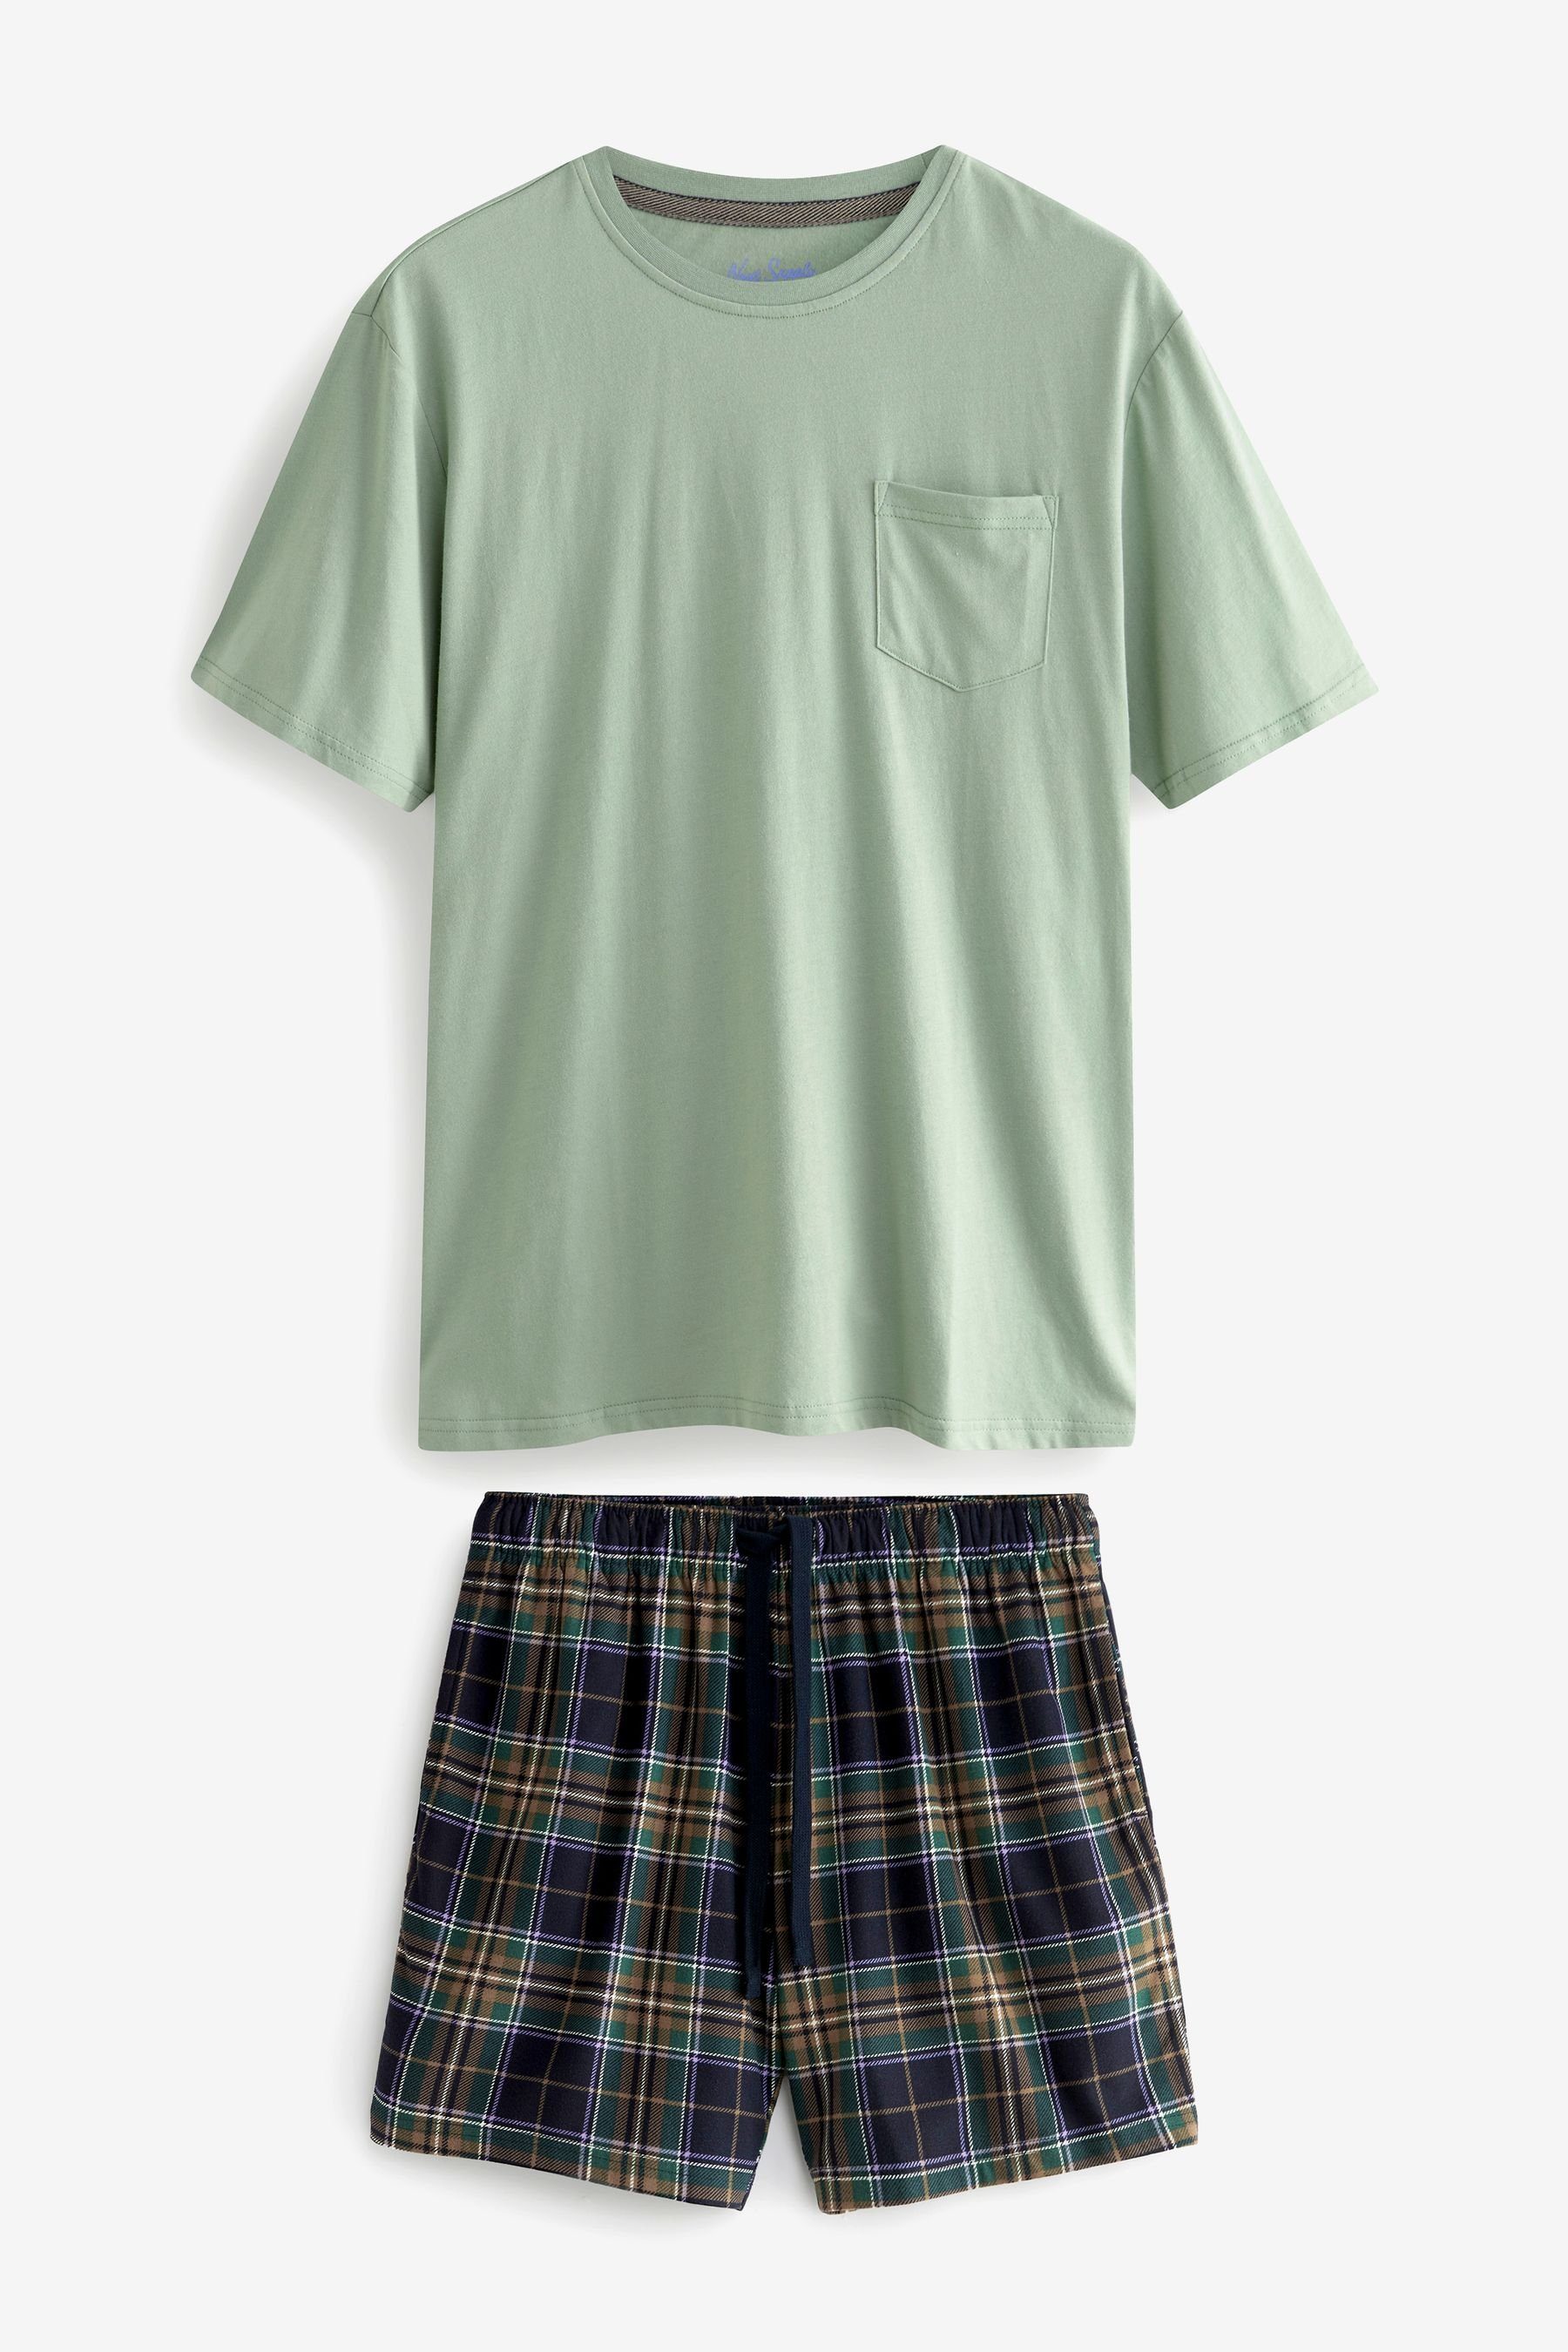 Next Pyjama Motion Flex Kuscheliger Pyjama mit Shorts (2 tlg) Pale Green/Navy Blue Check